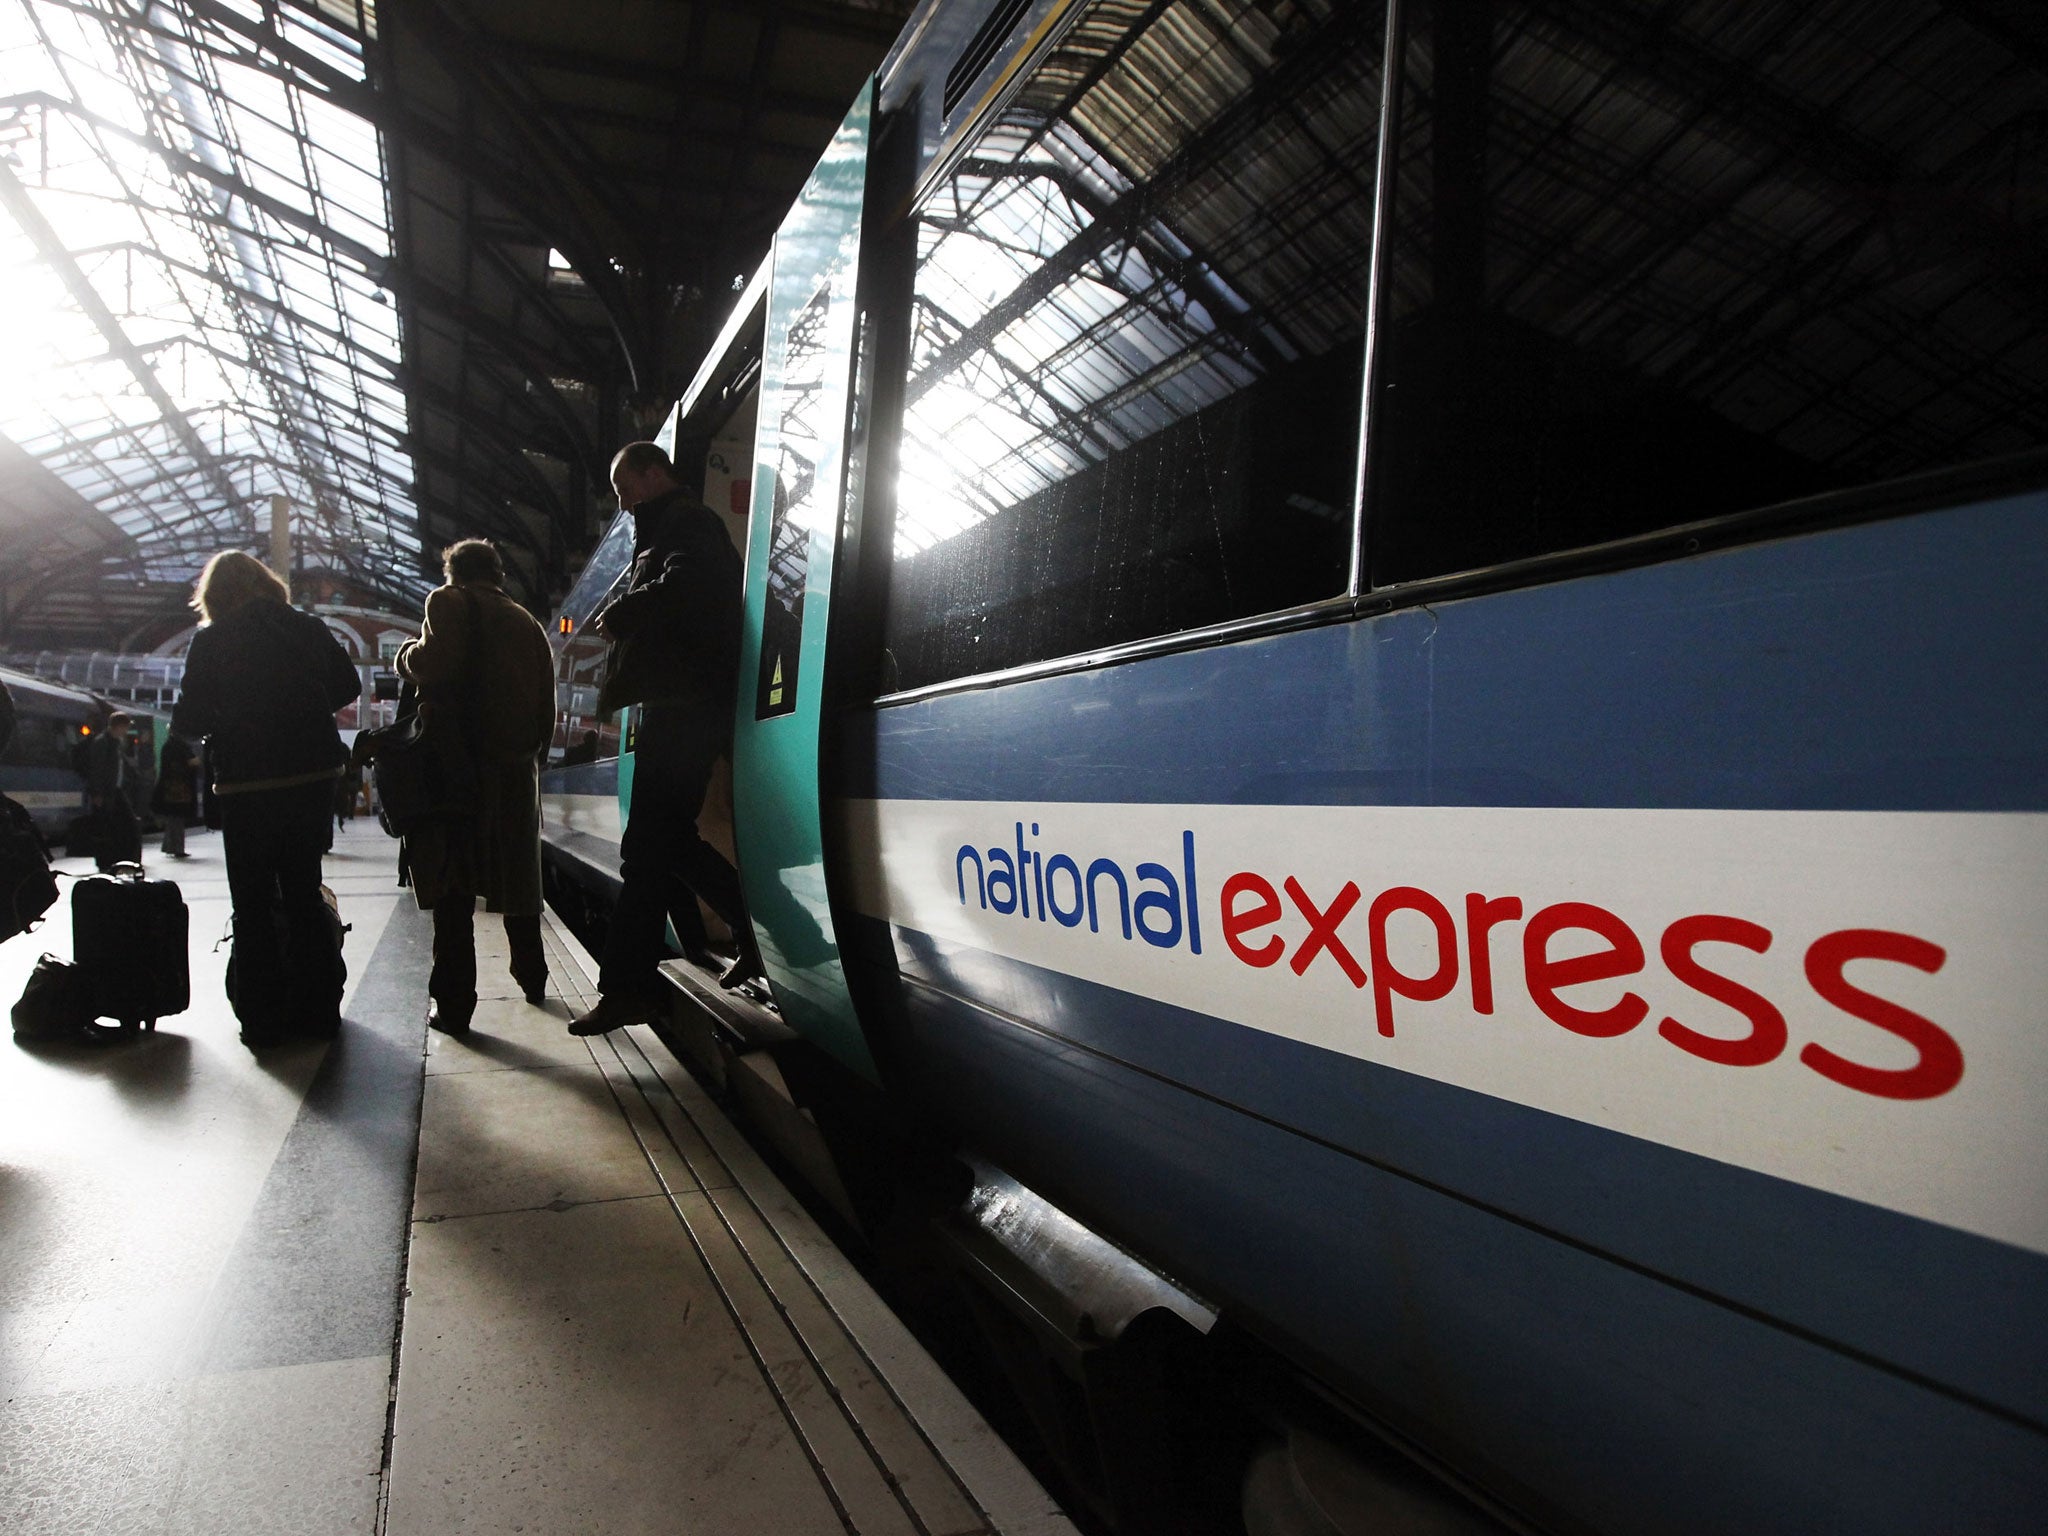 Members of the public disembark a National Express train